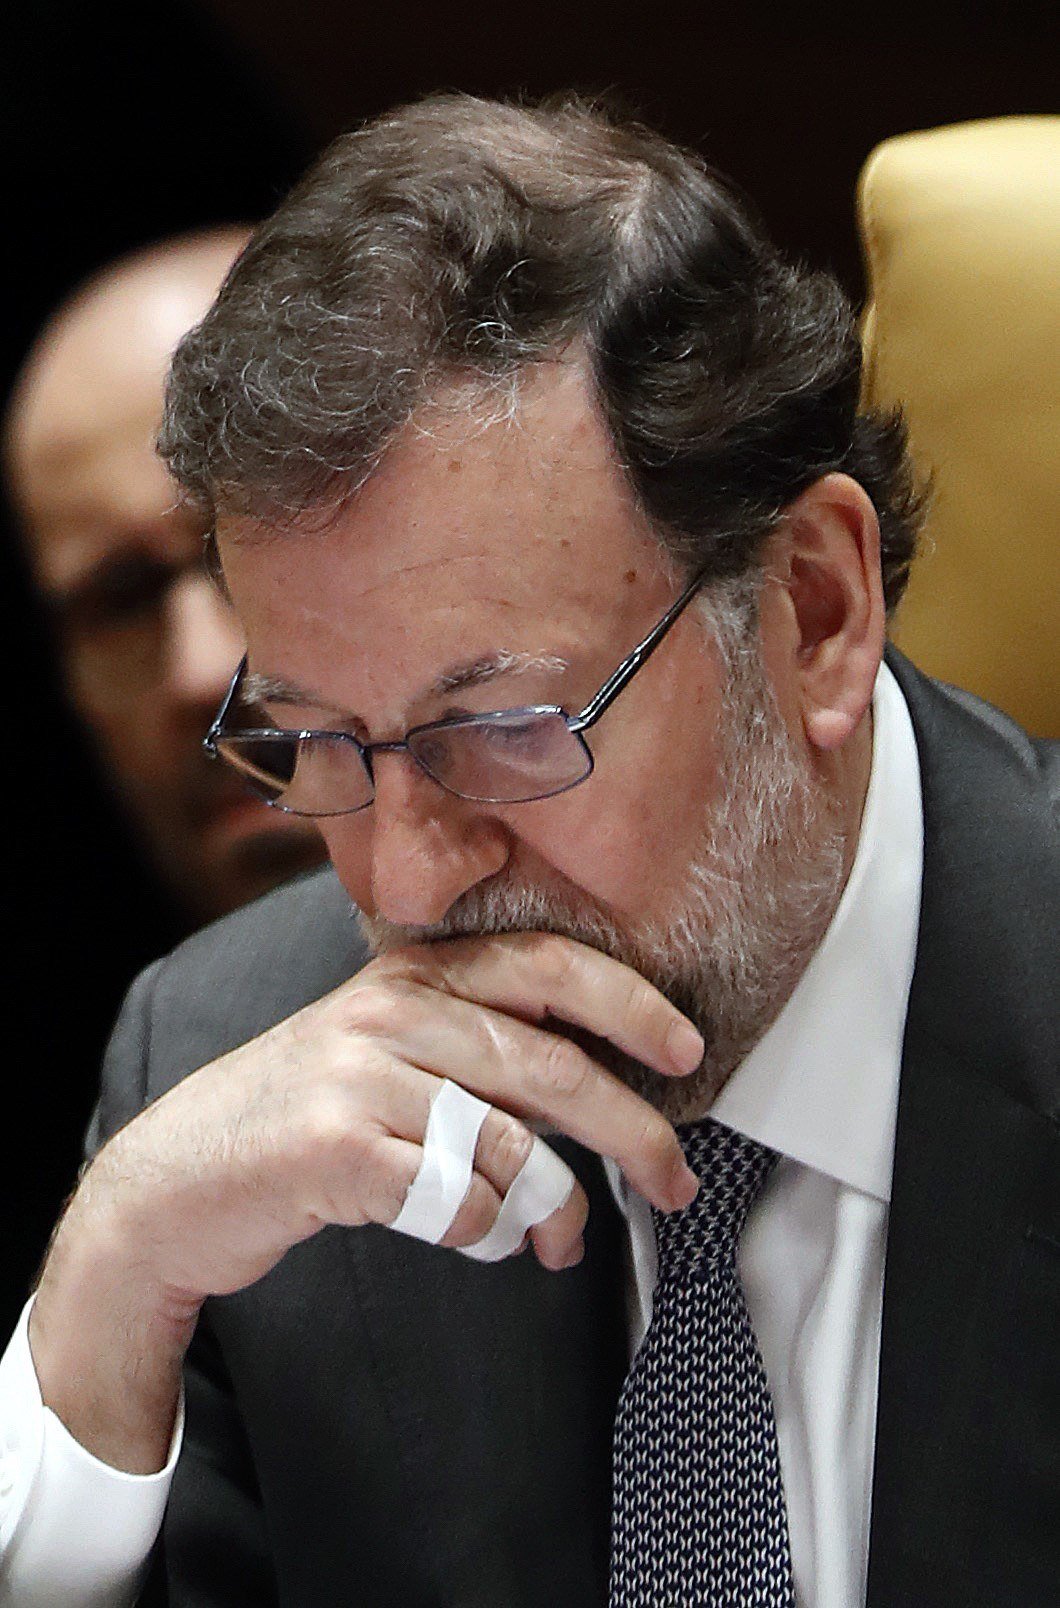 El govern de Rajoy: "La justícia espanyola adoptarà les mesures adequades"